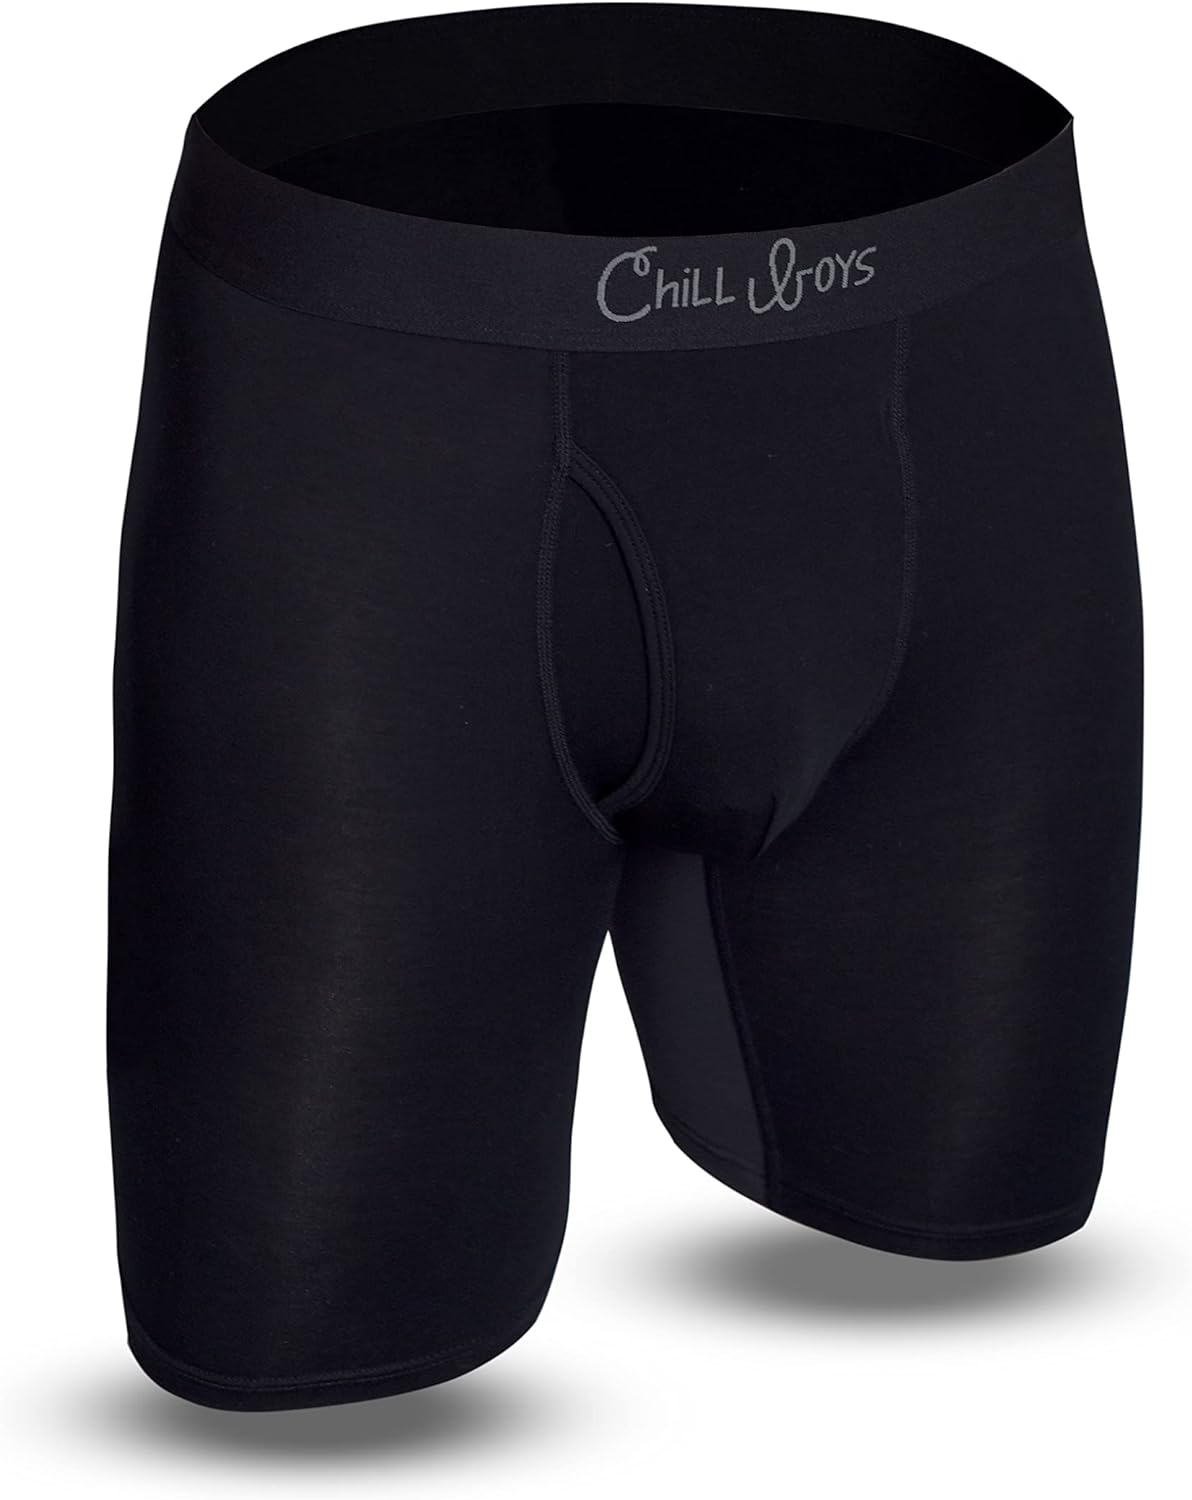 Chill Boys - Cool, Comfortable & Breathable Mens Underwear - Men's